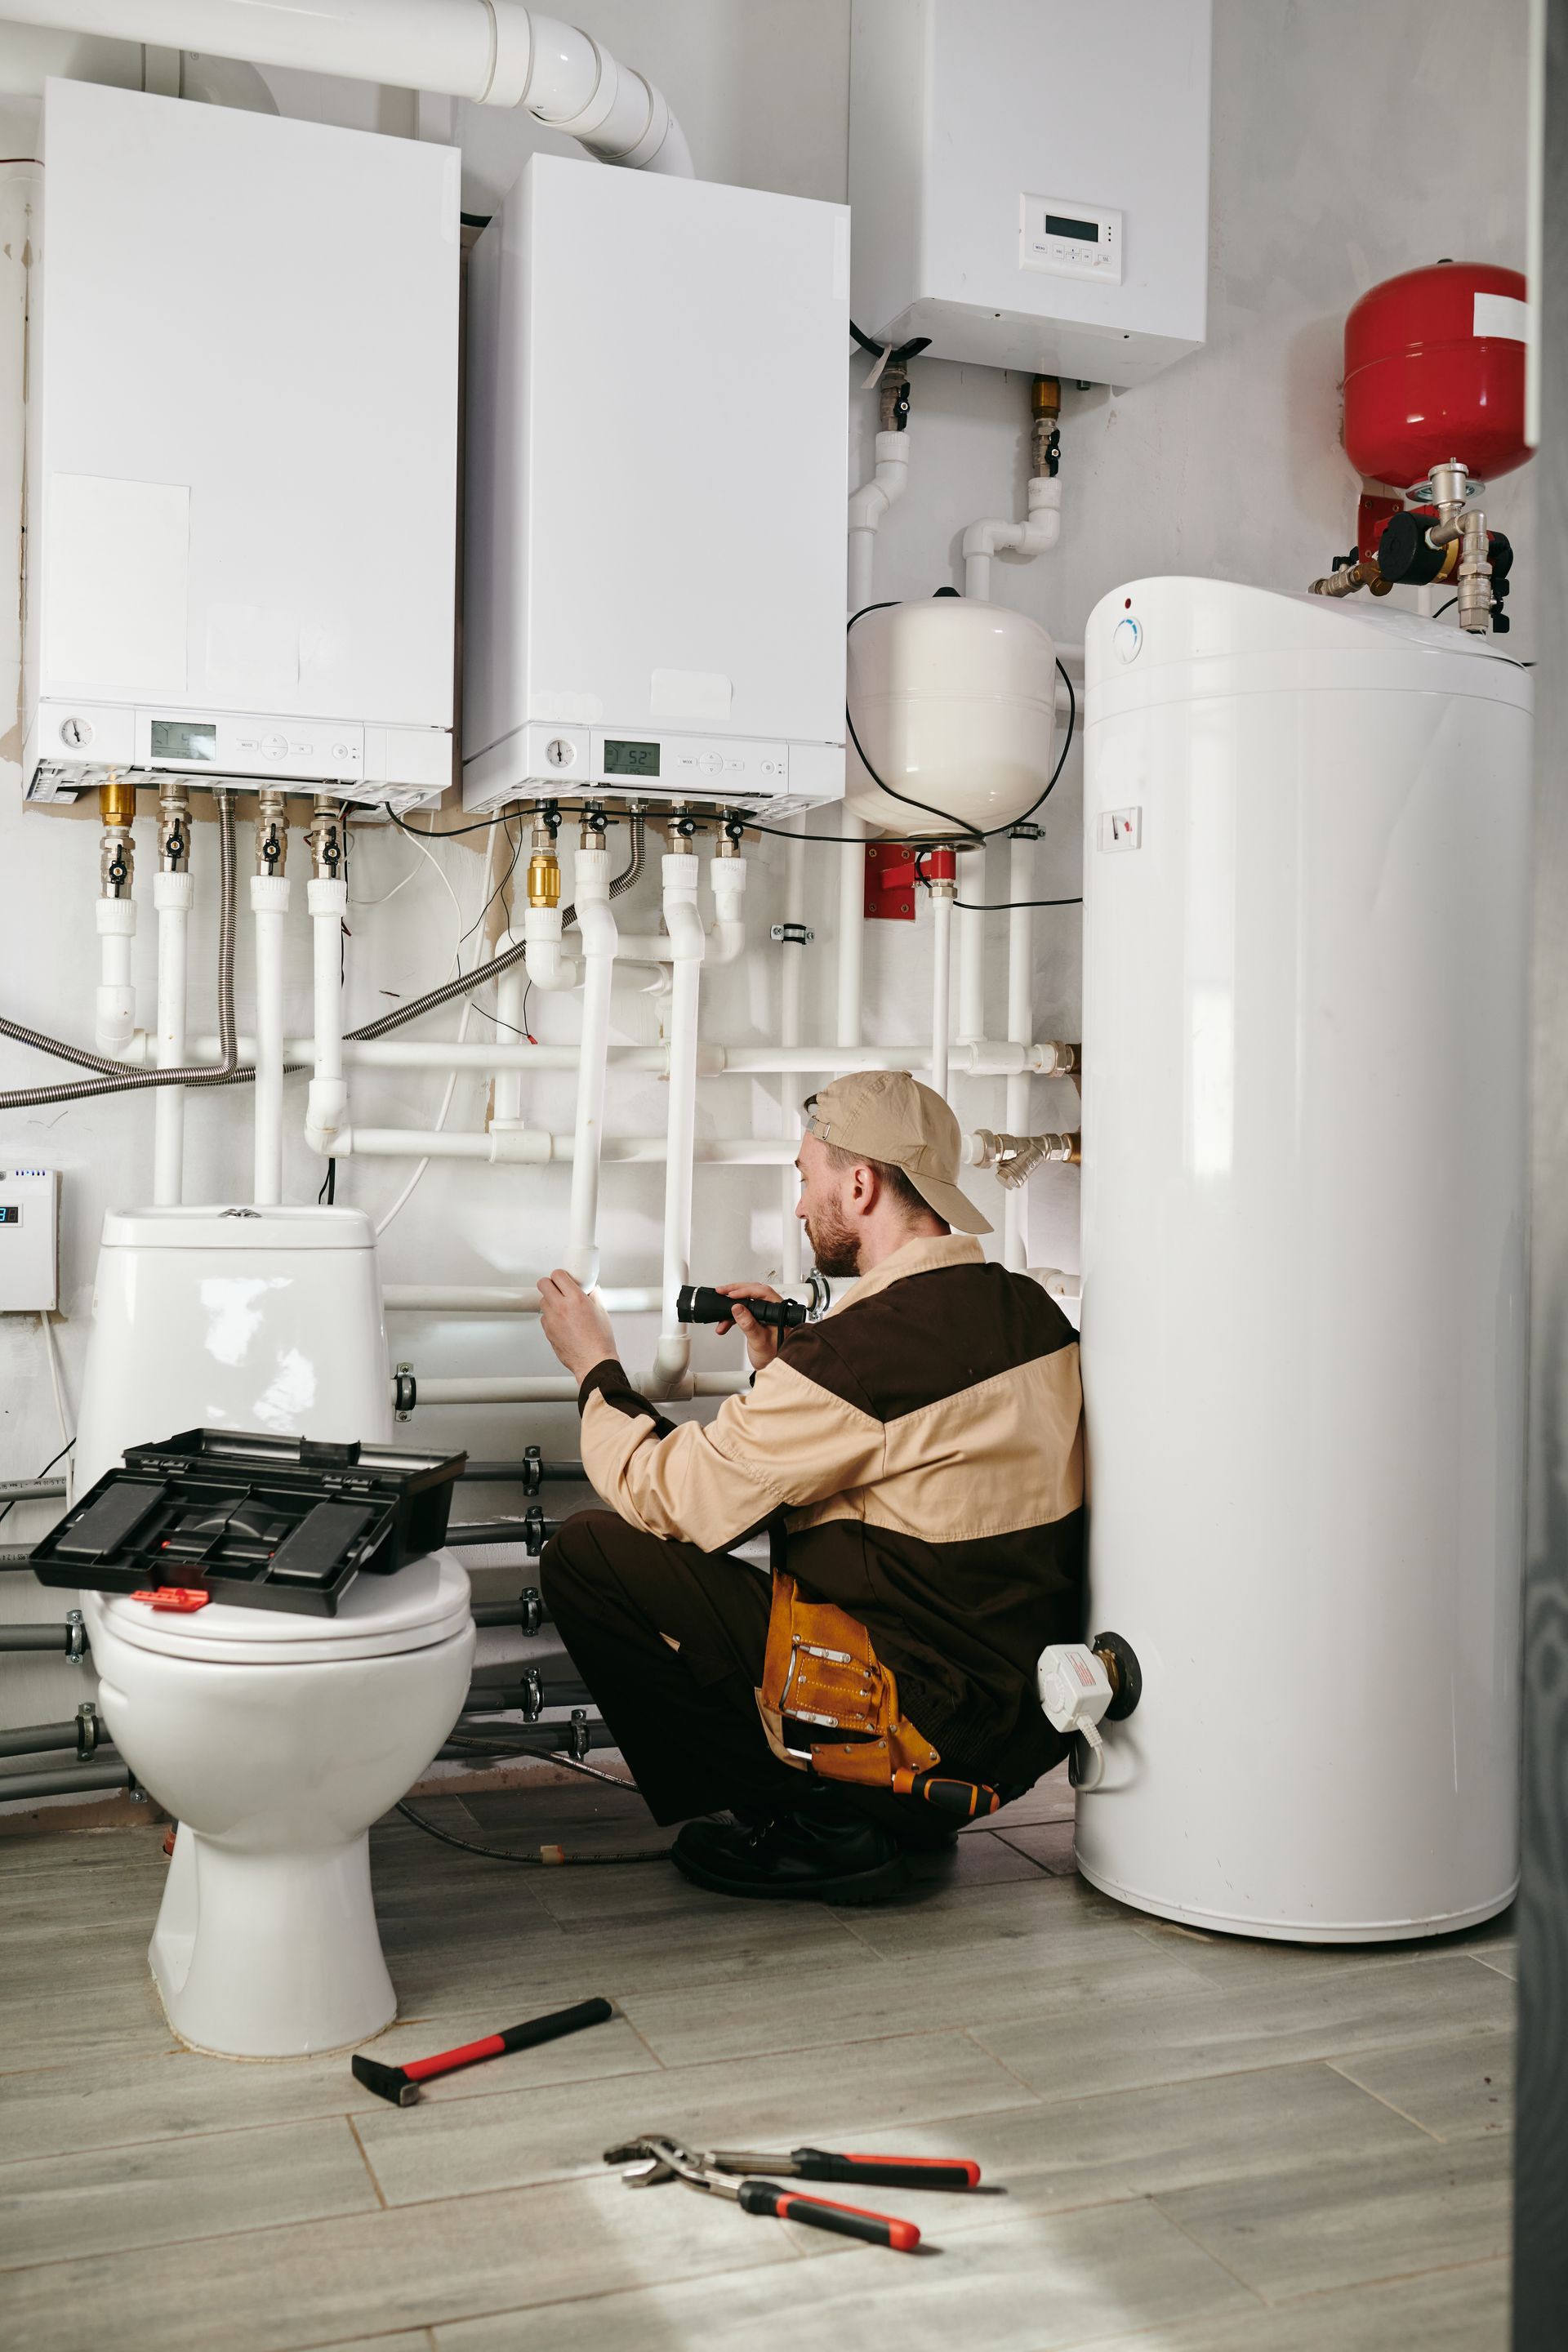 plumber repairing toilet and pipes